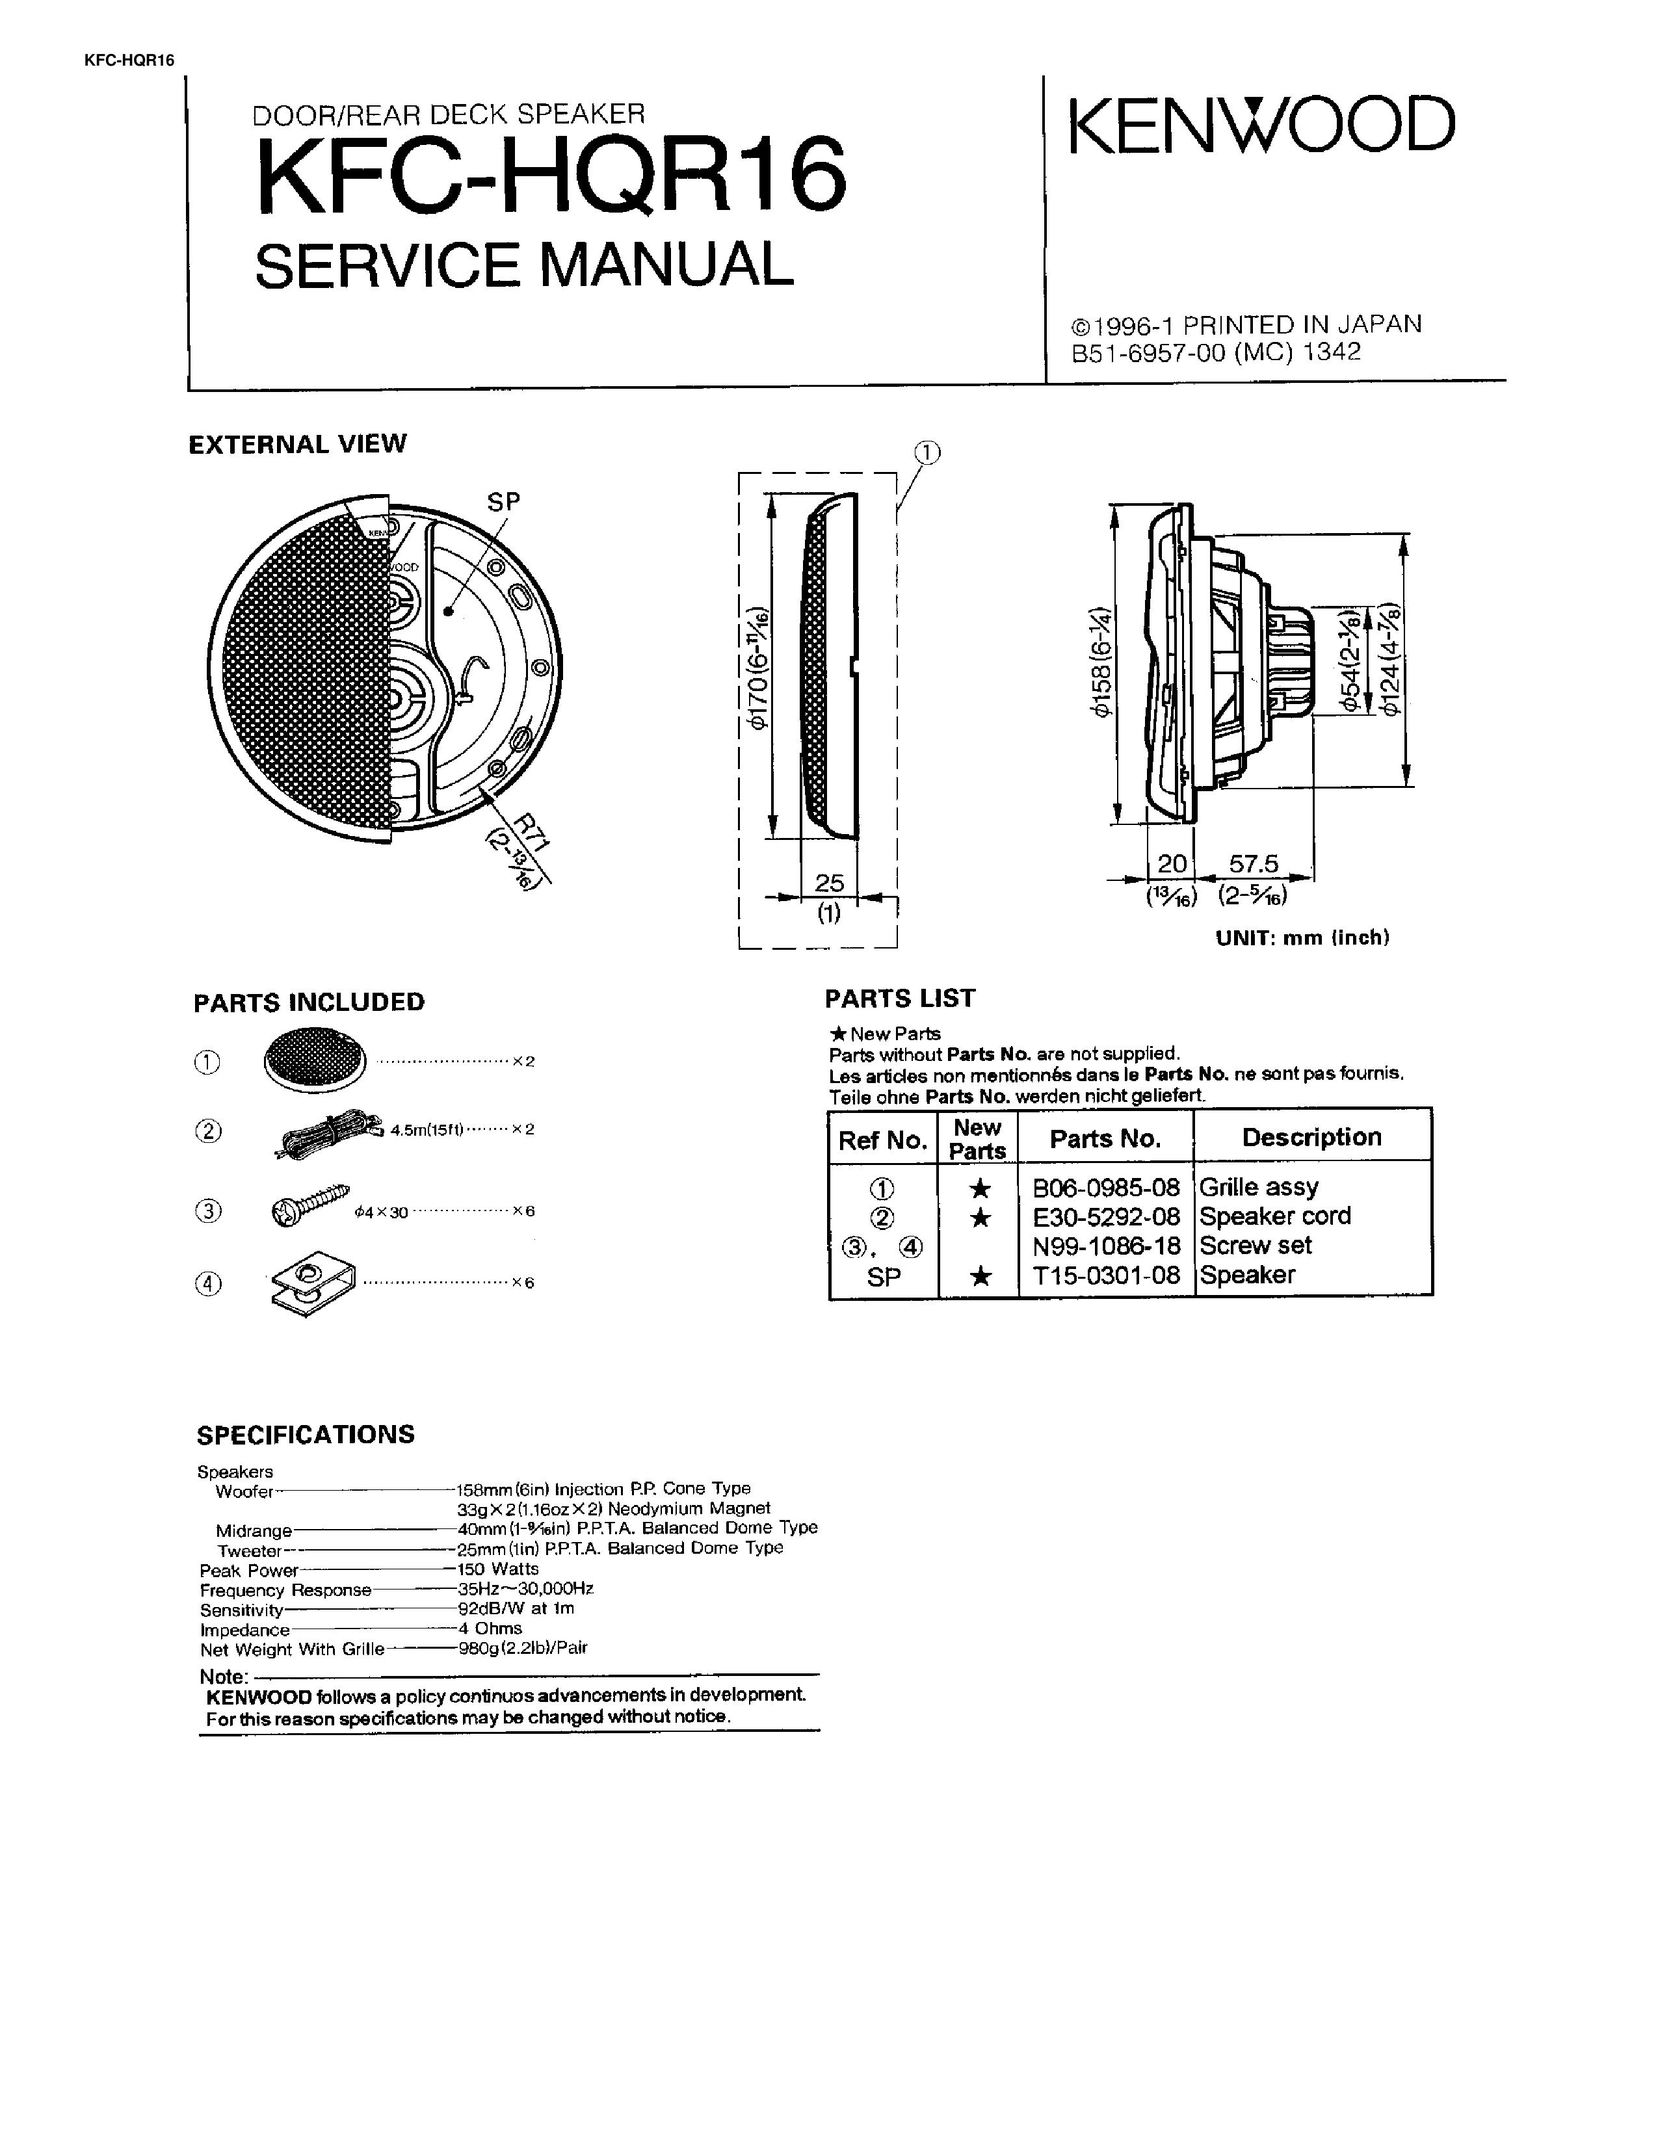 Kenwood KFC-HQR16 Car Speaker User Manual